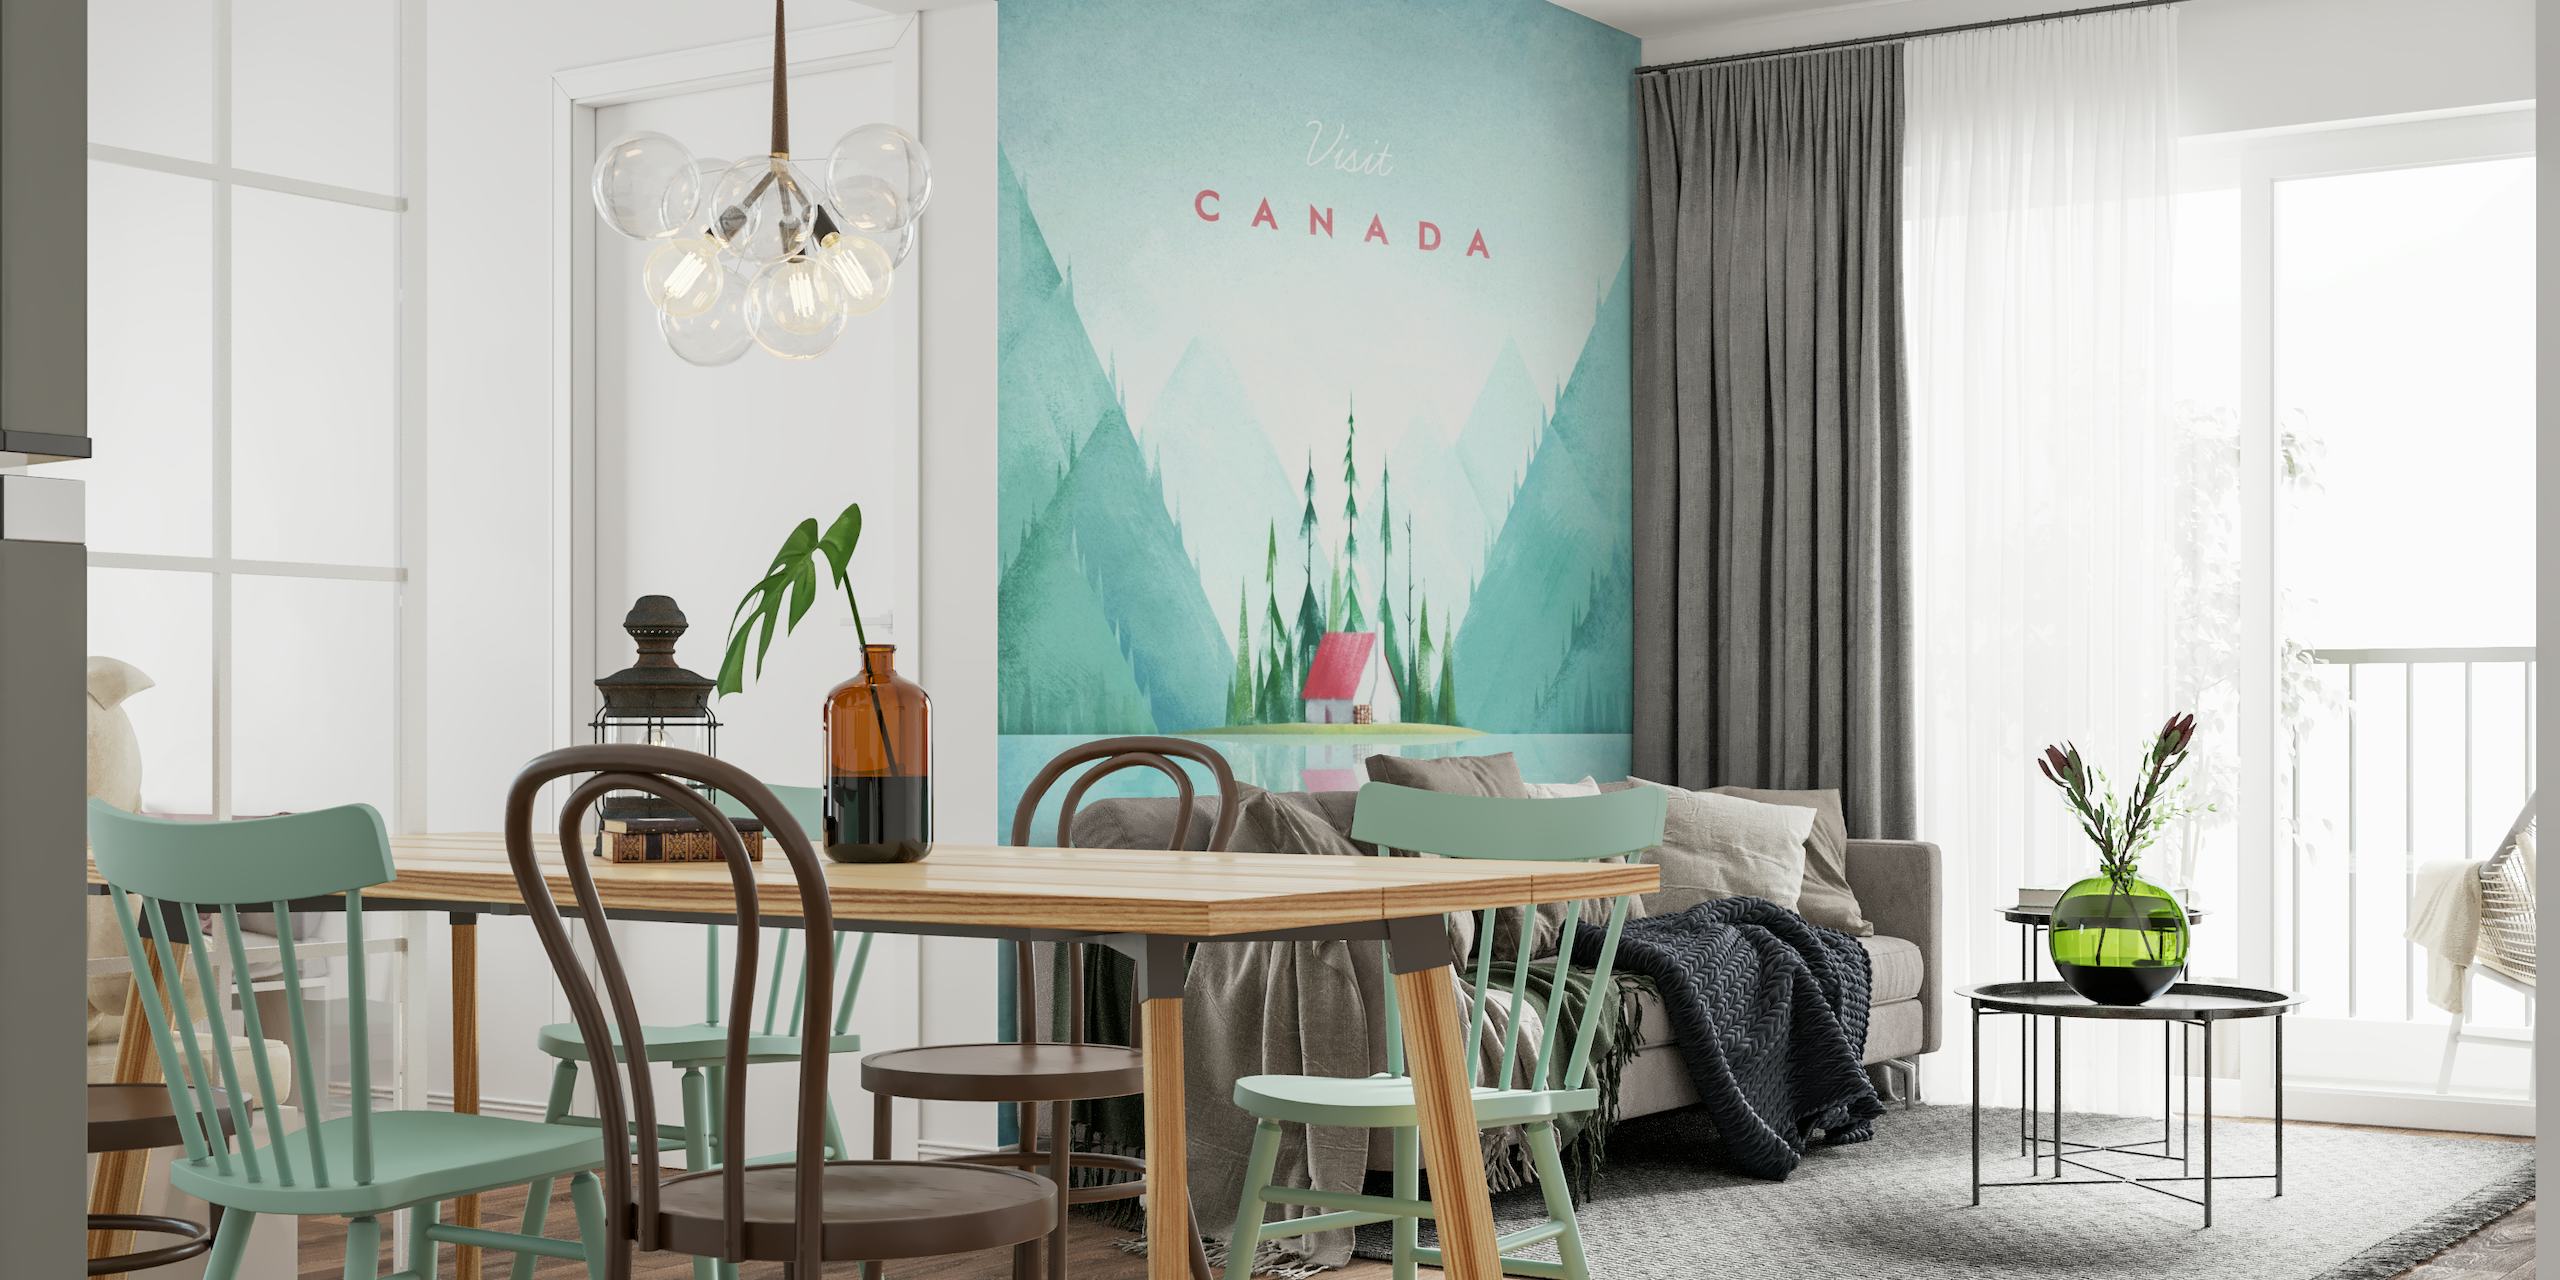 Canada Travel Poster papel pintado